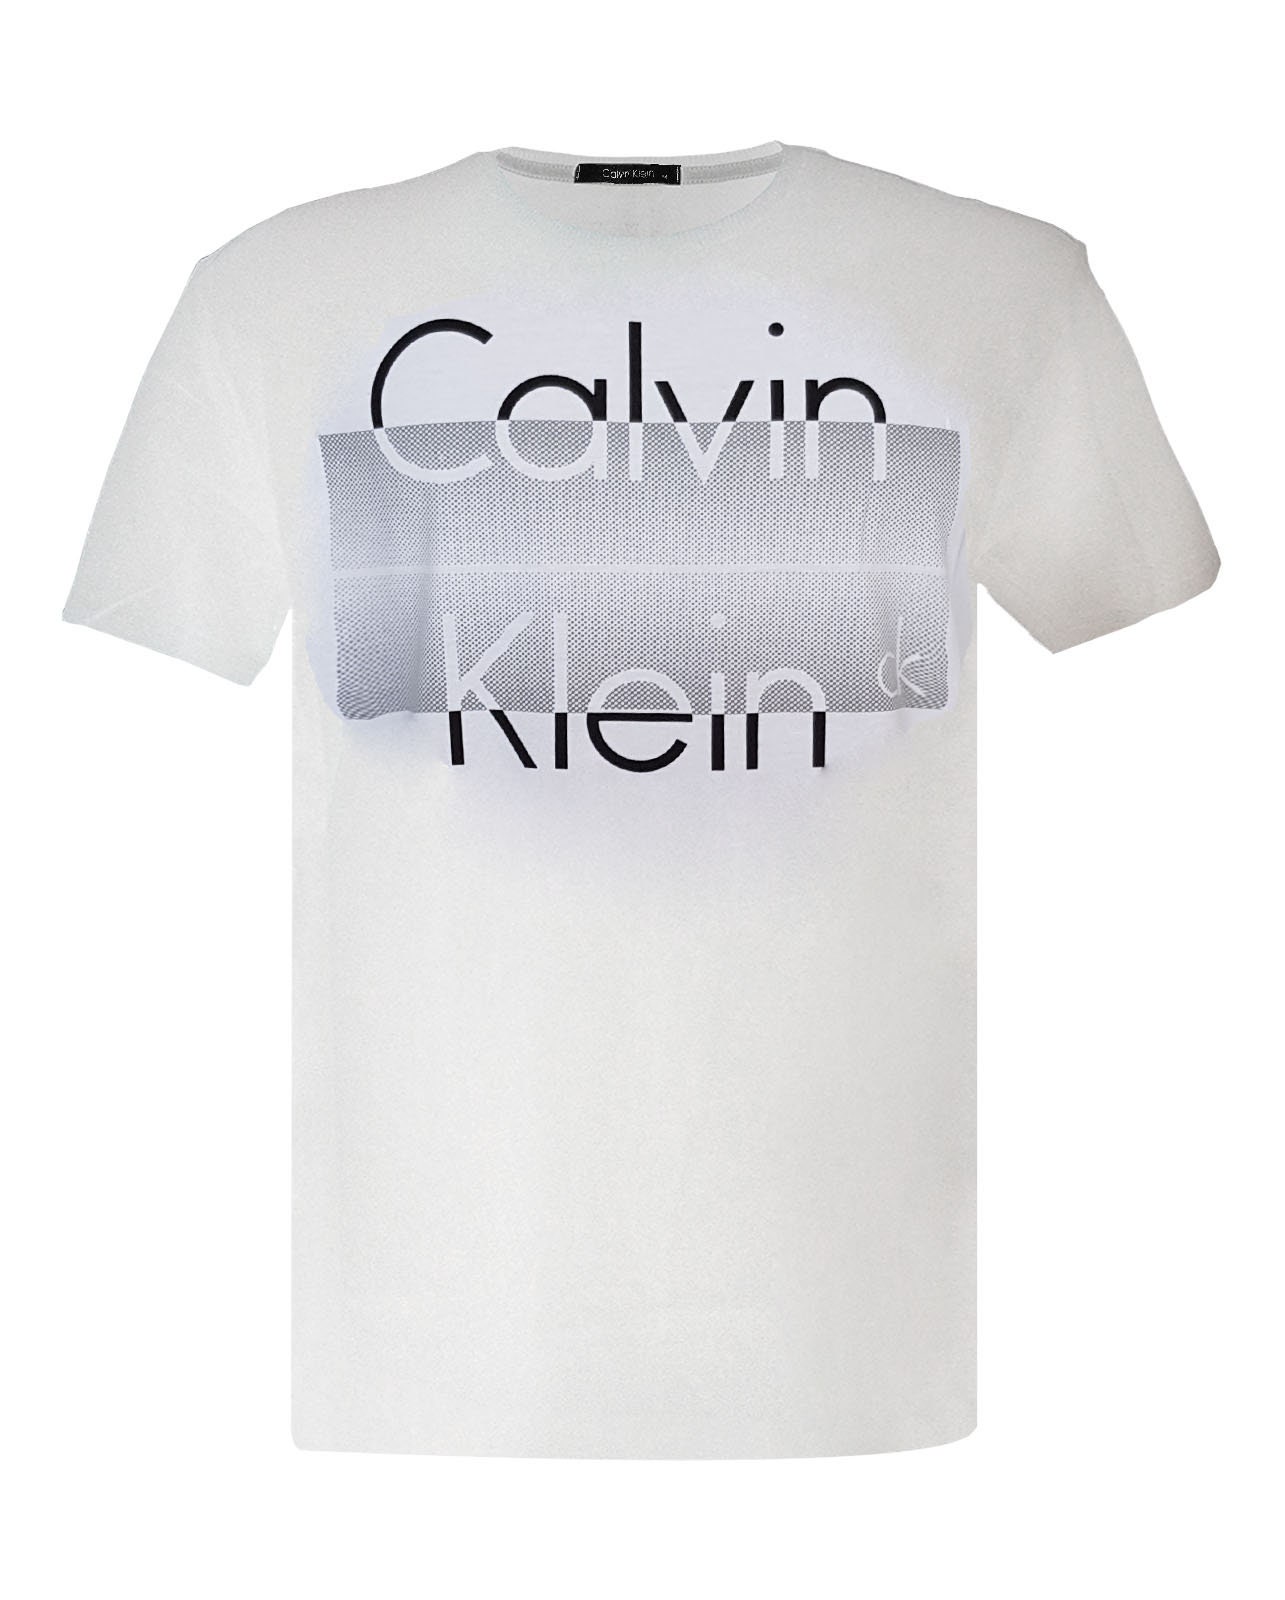 Vintage Mens Ck Calvin Klein T-shirt Short Sleeve Shirt Top Tee White Black  L XL XXL NEW - Etsy